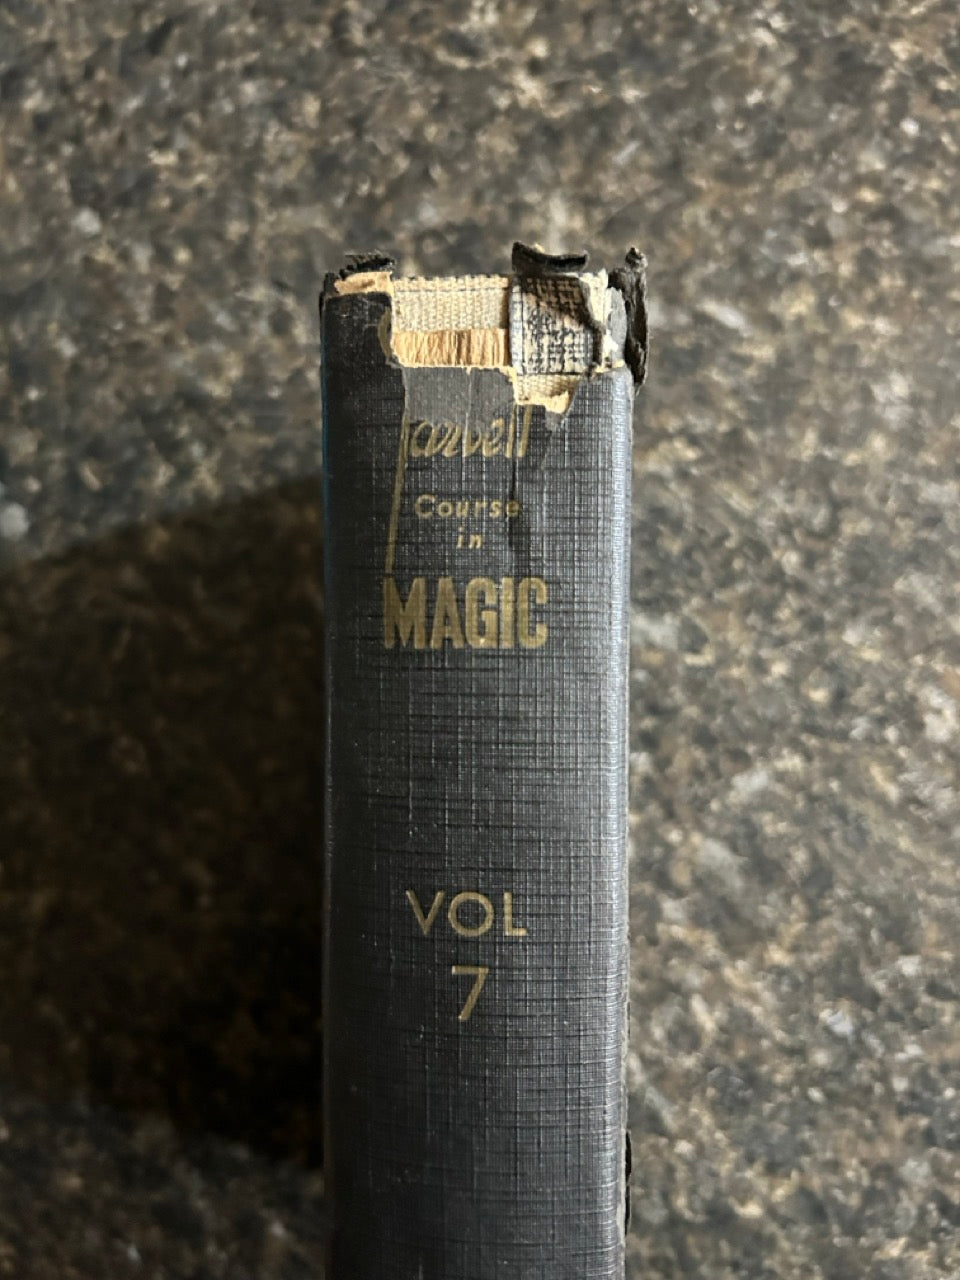 Tarbell Course in Magic Vol.1-7 - Harlan Tarbell